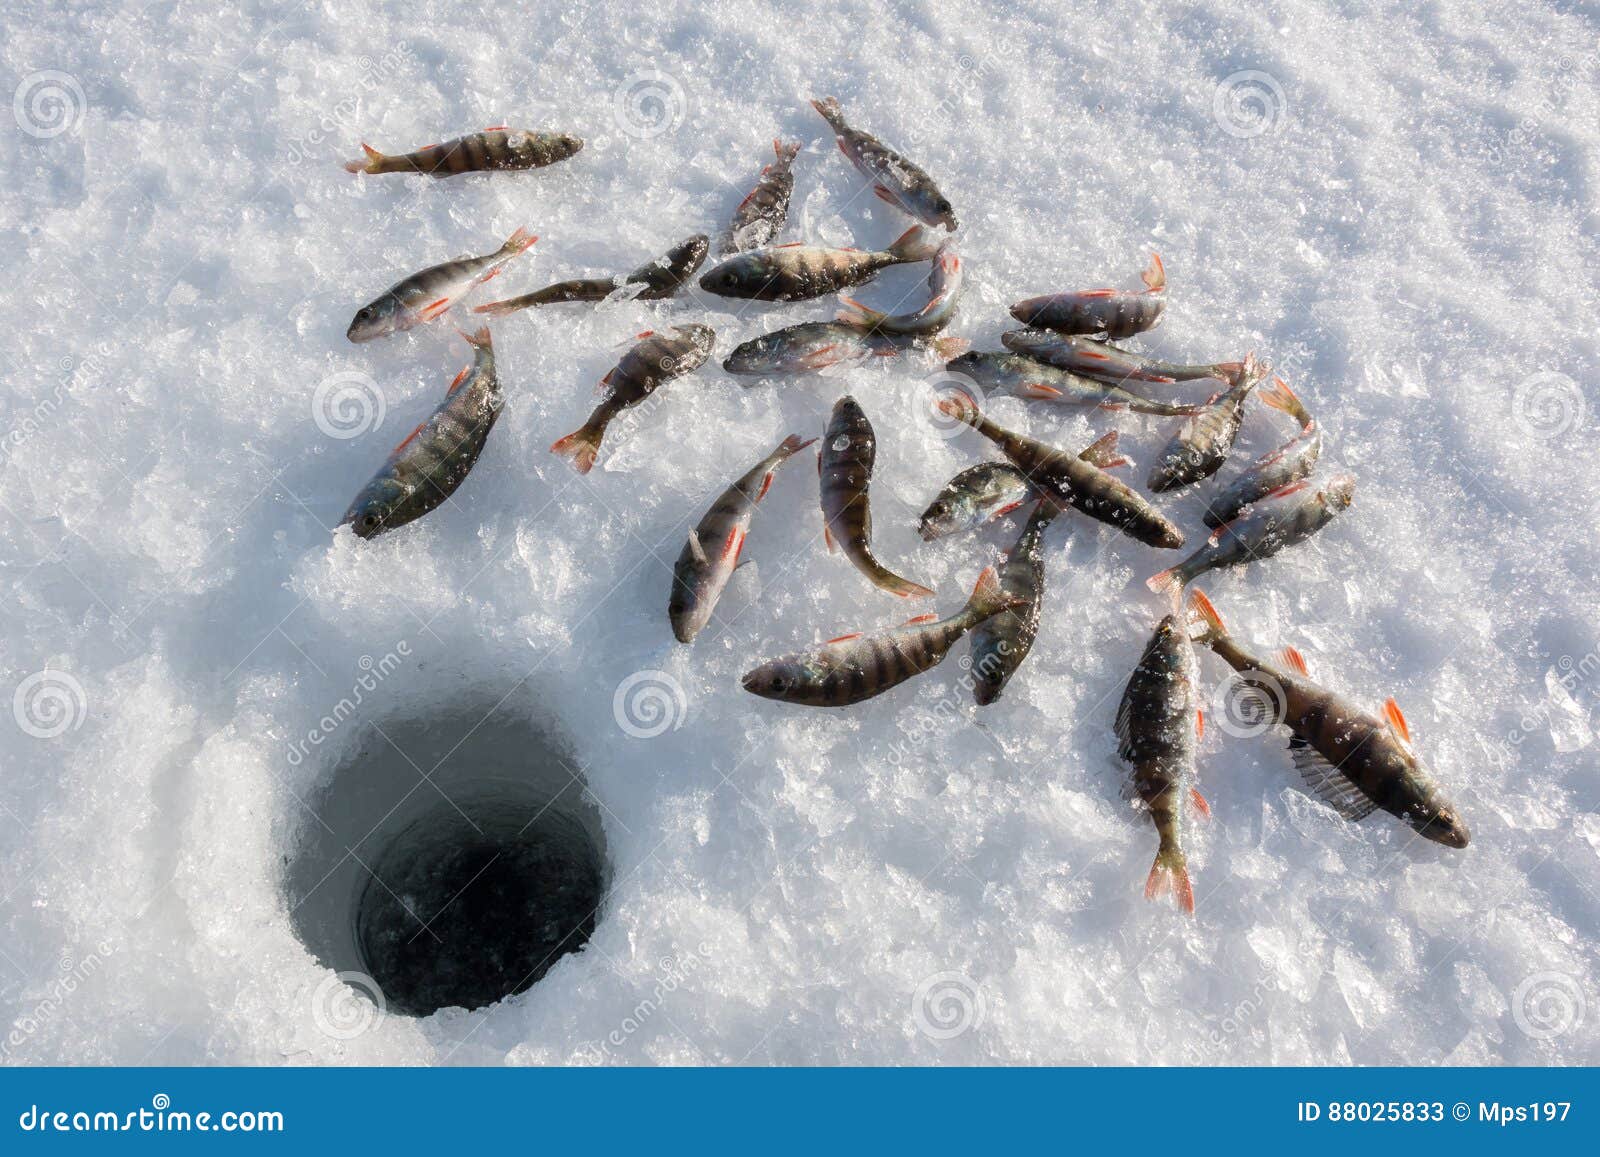 perch around an ice fishing hole